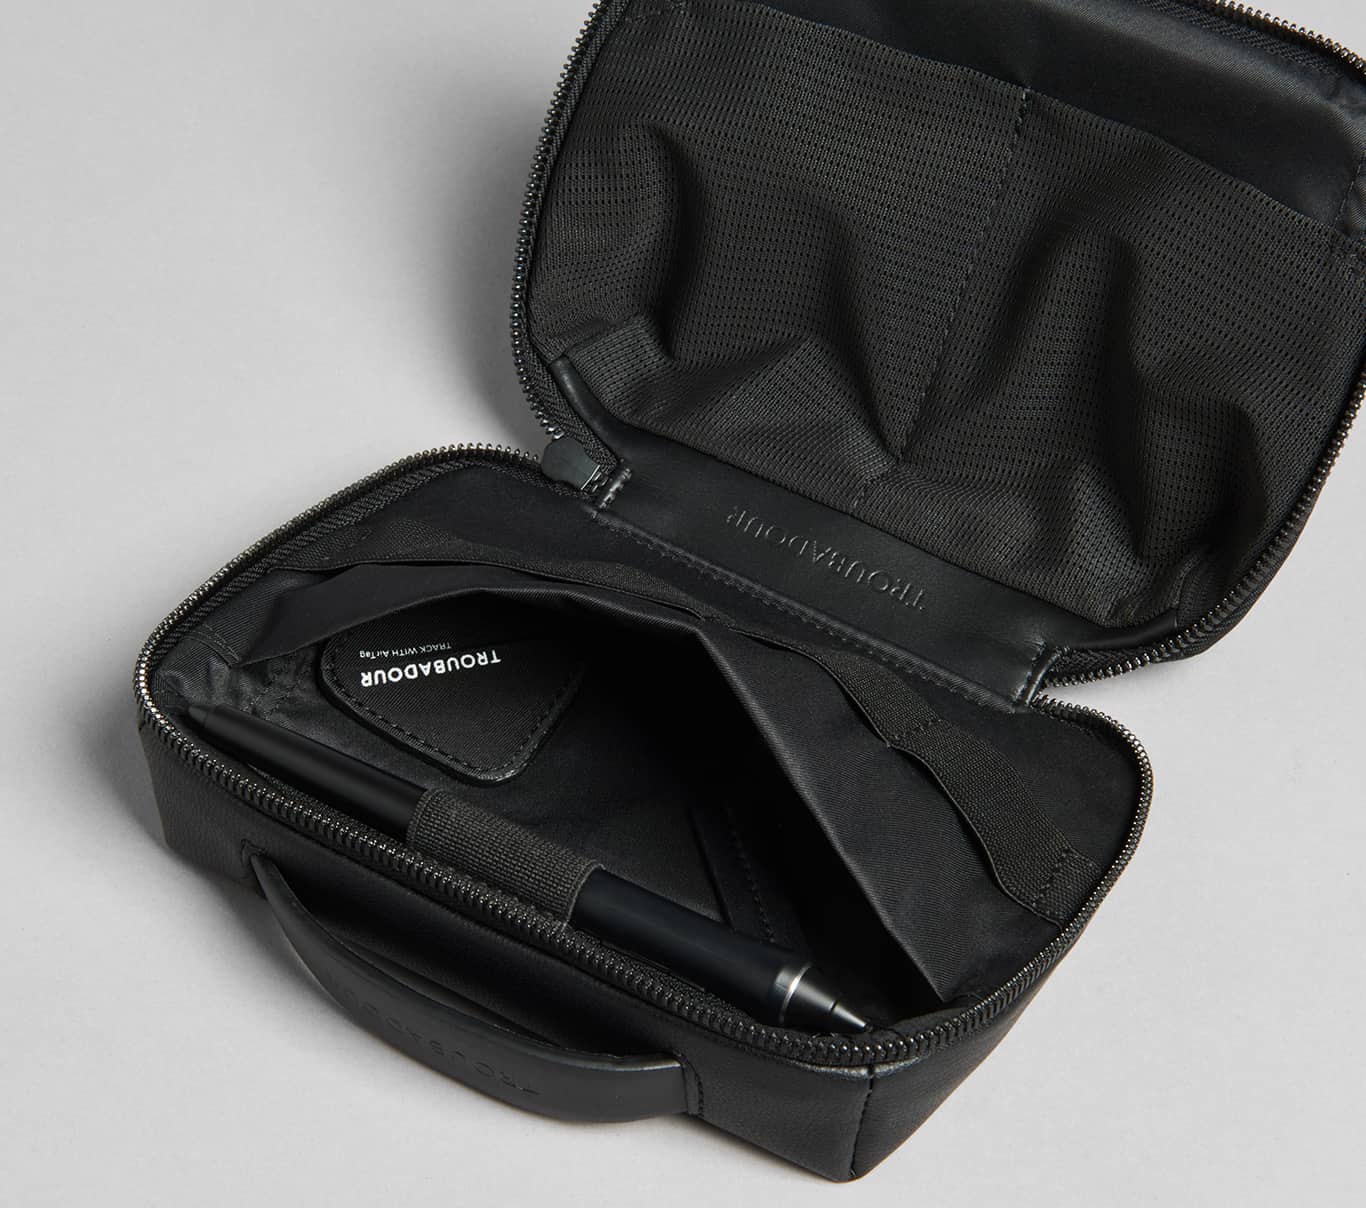 Troubadour's Buddy case showcasing its internal zipped pocket and pen storage